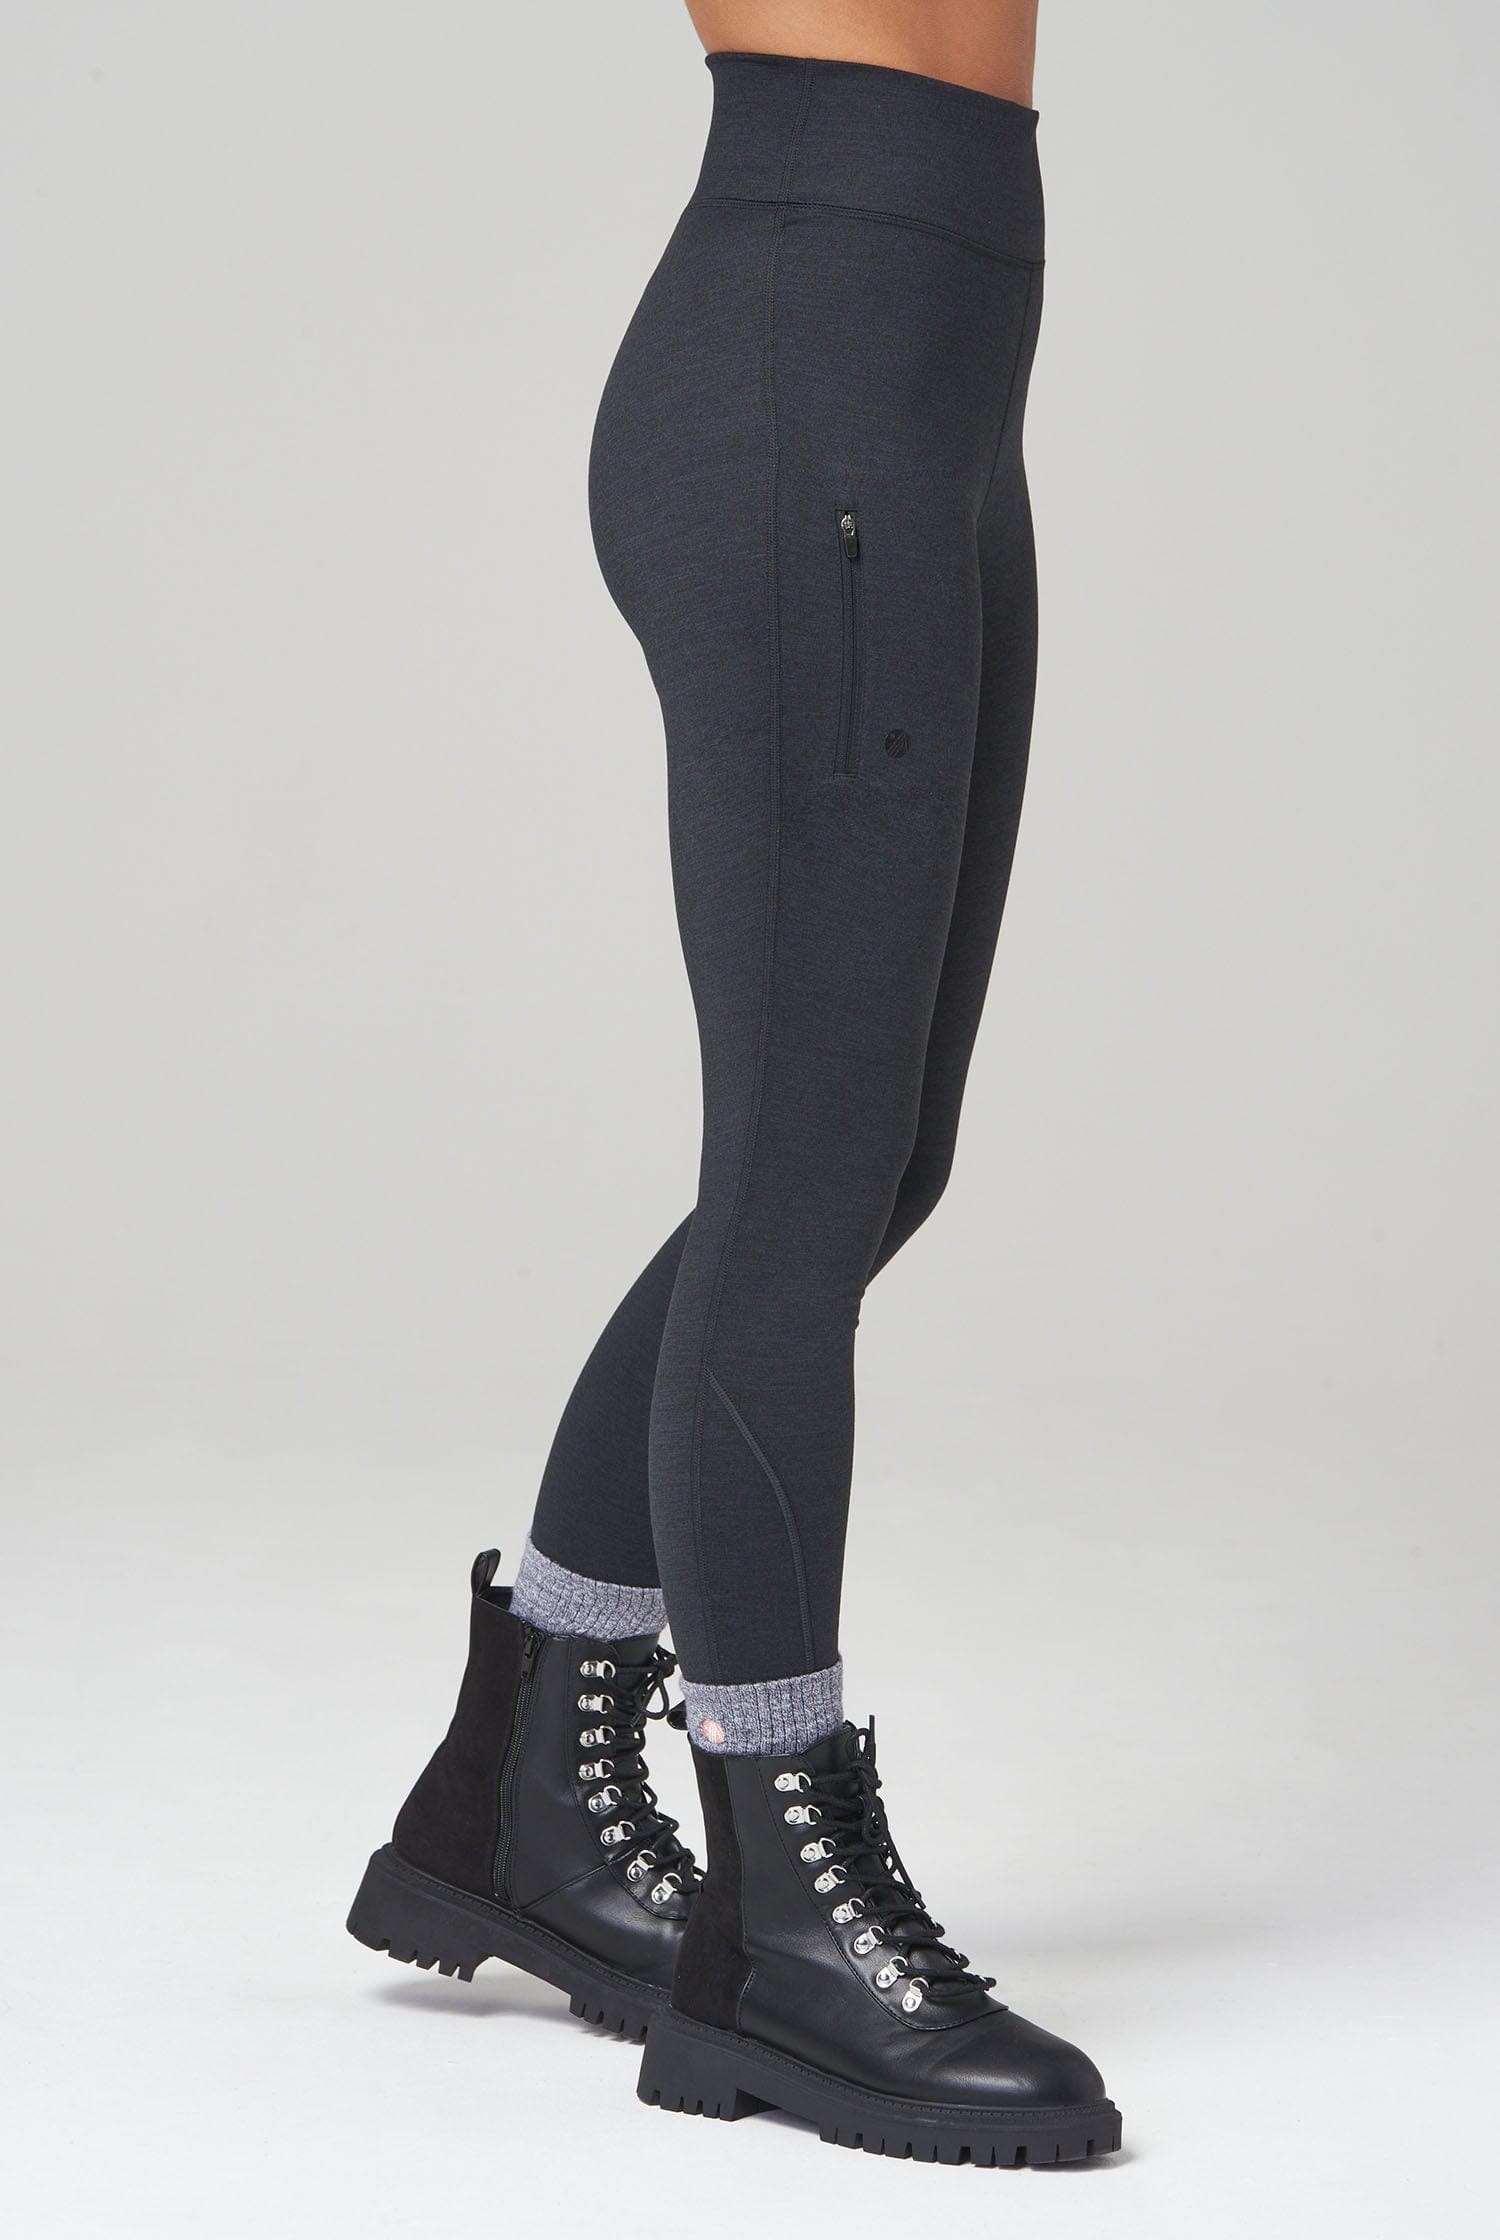 NEW NIKE [XL] Women Element Shield STAY WARM Thermal Running Leggings-Black  381052-013 – VALLEYSPORTING